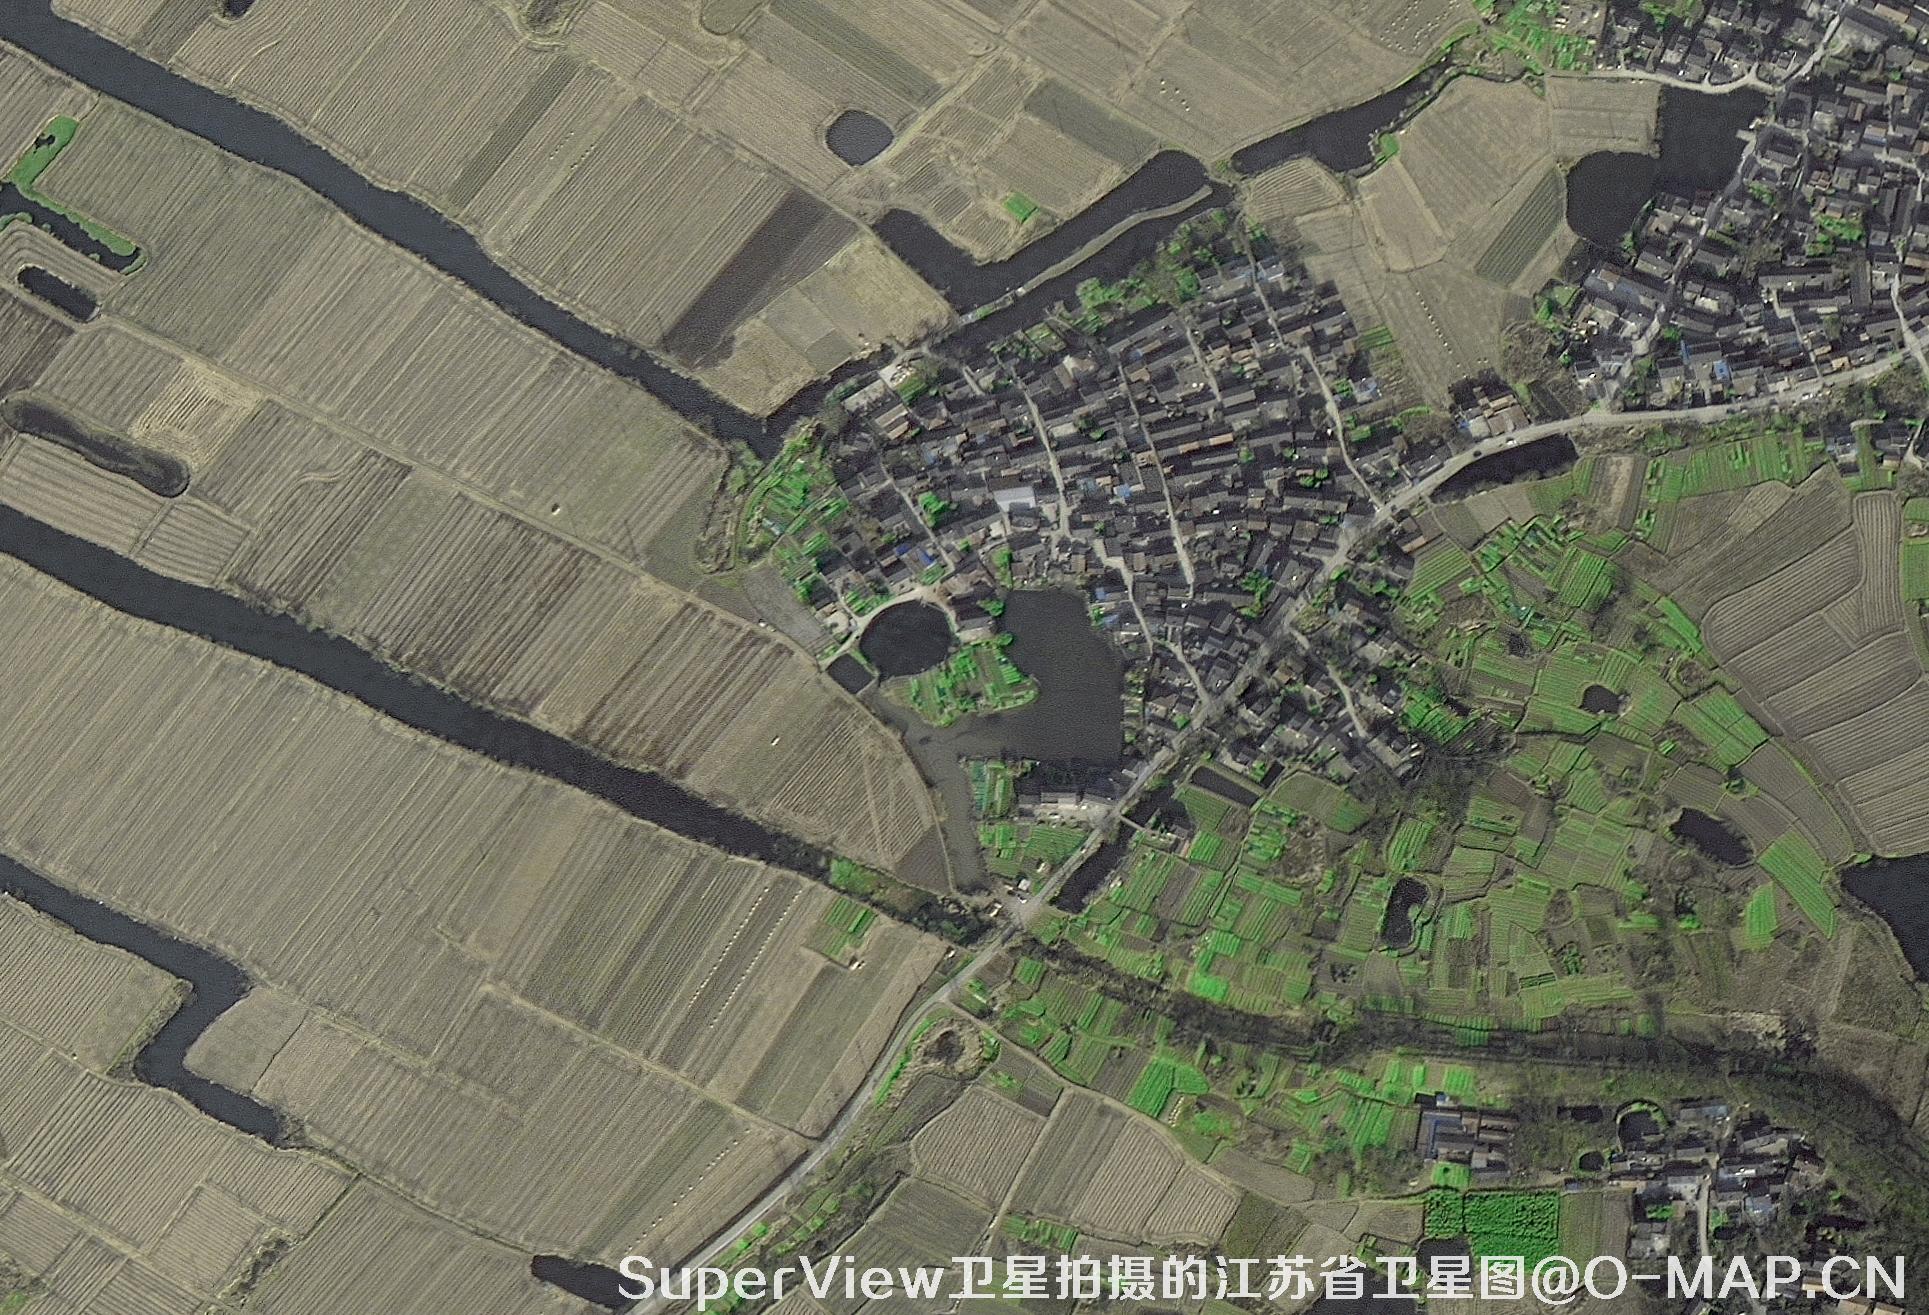 SuperView卫星拍摄的江苏省句容市卫星图